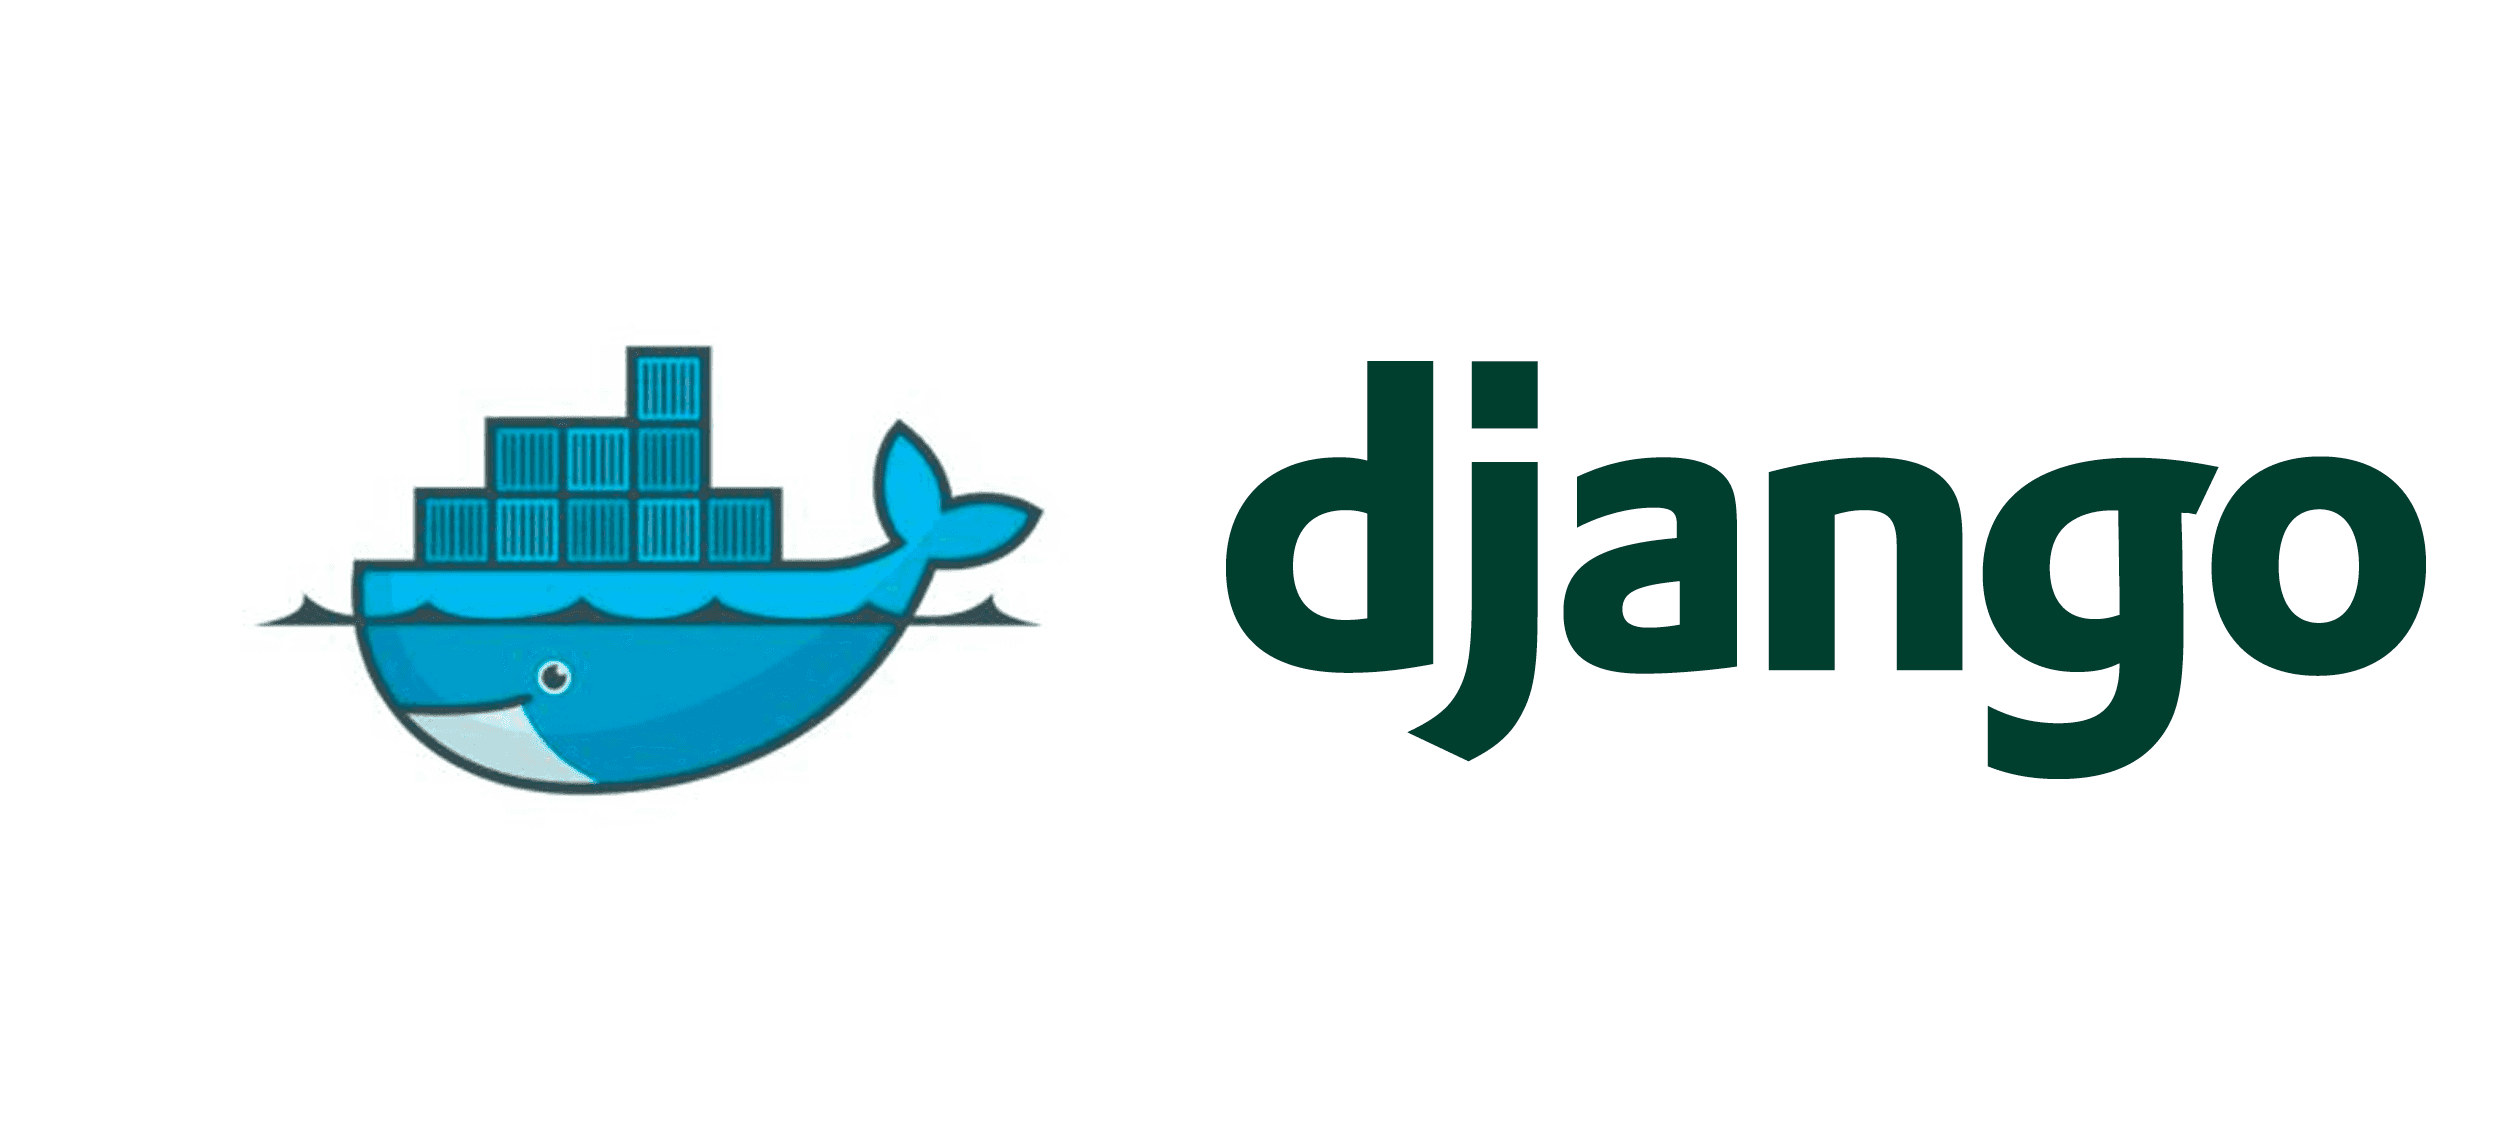 Setup your Django app with Docker and Compose.